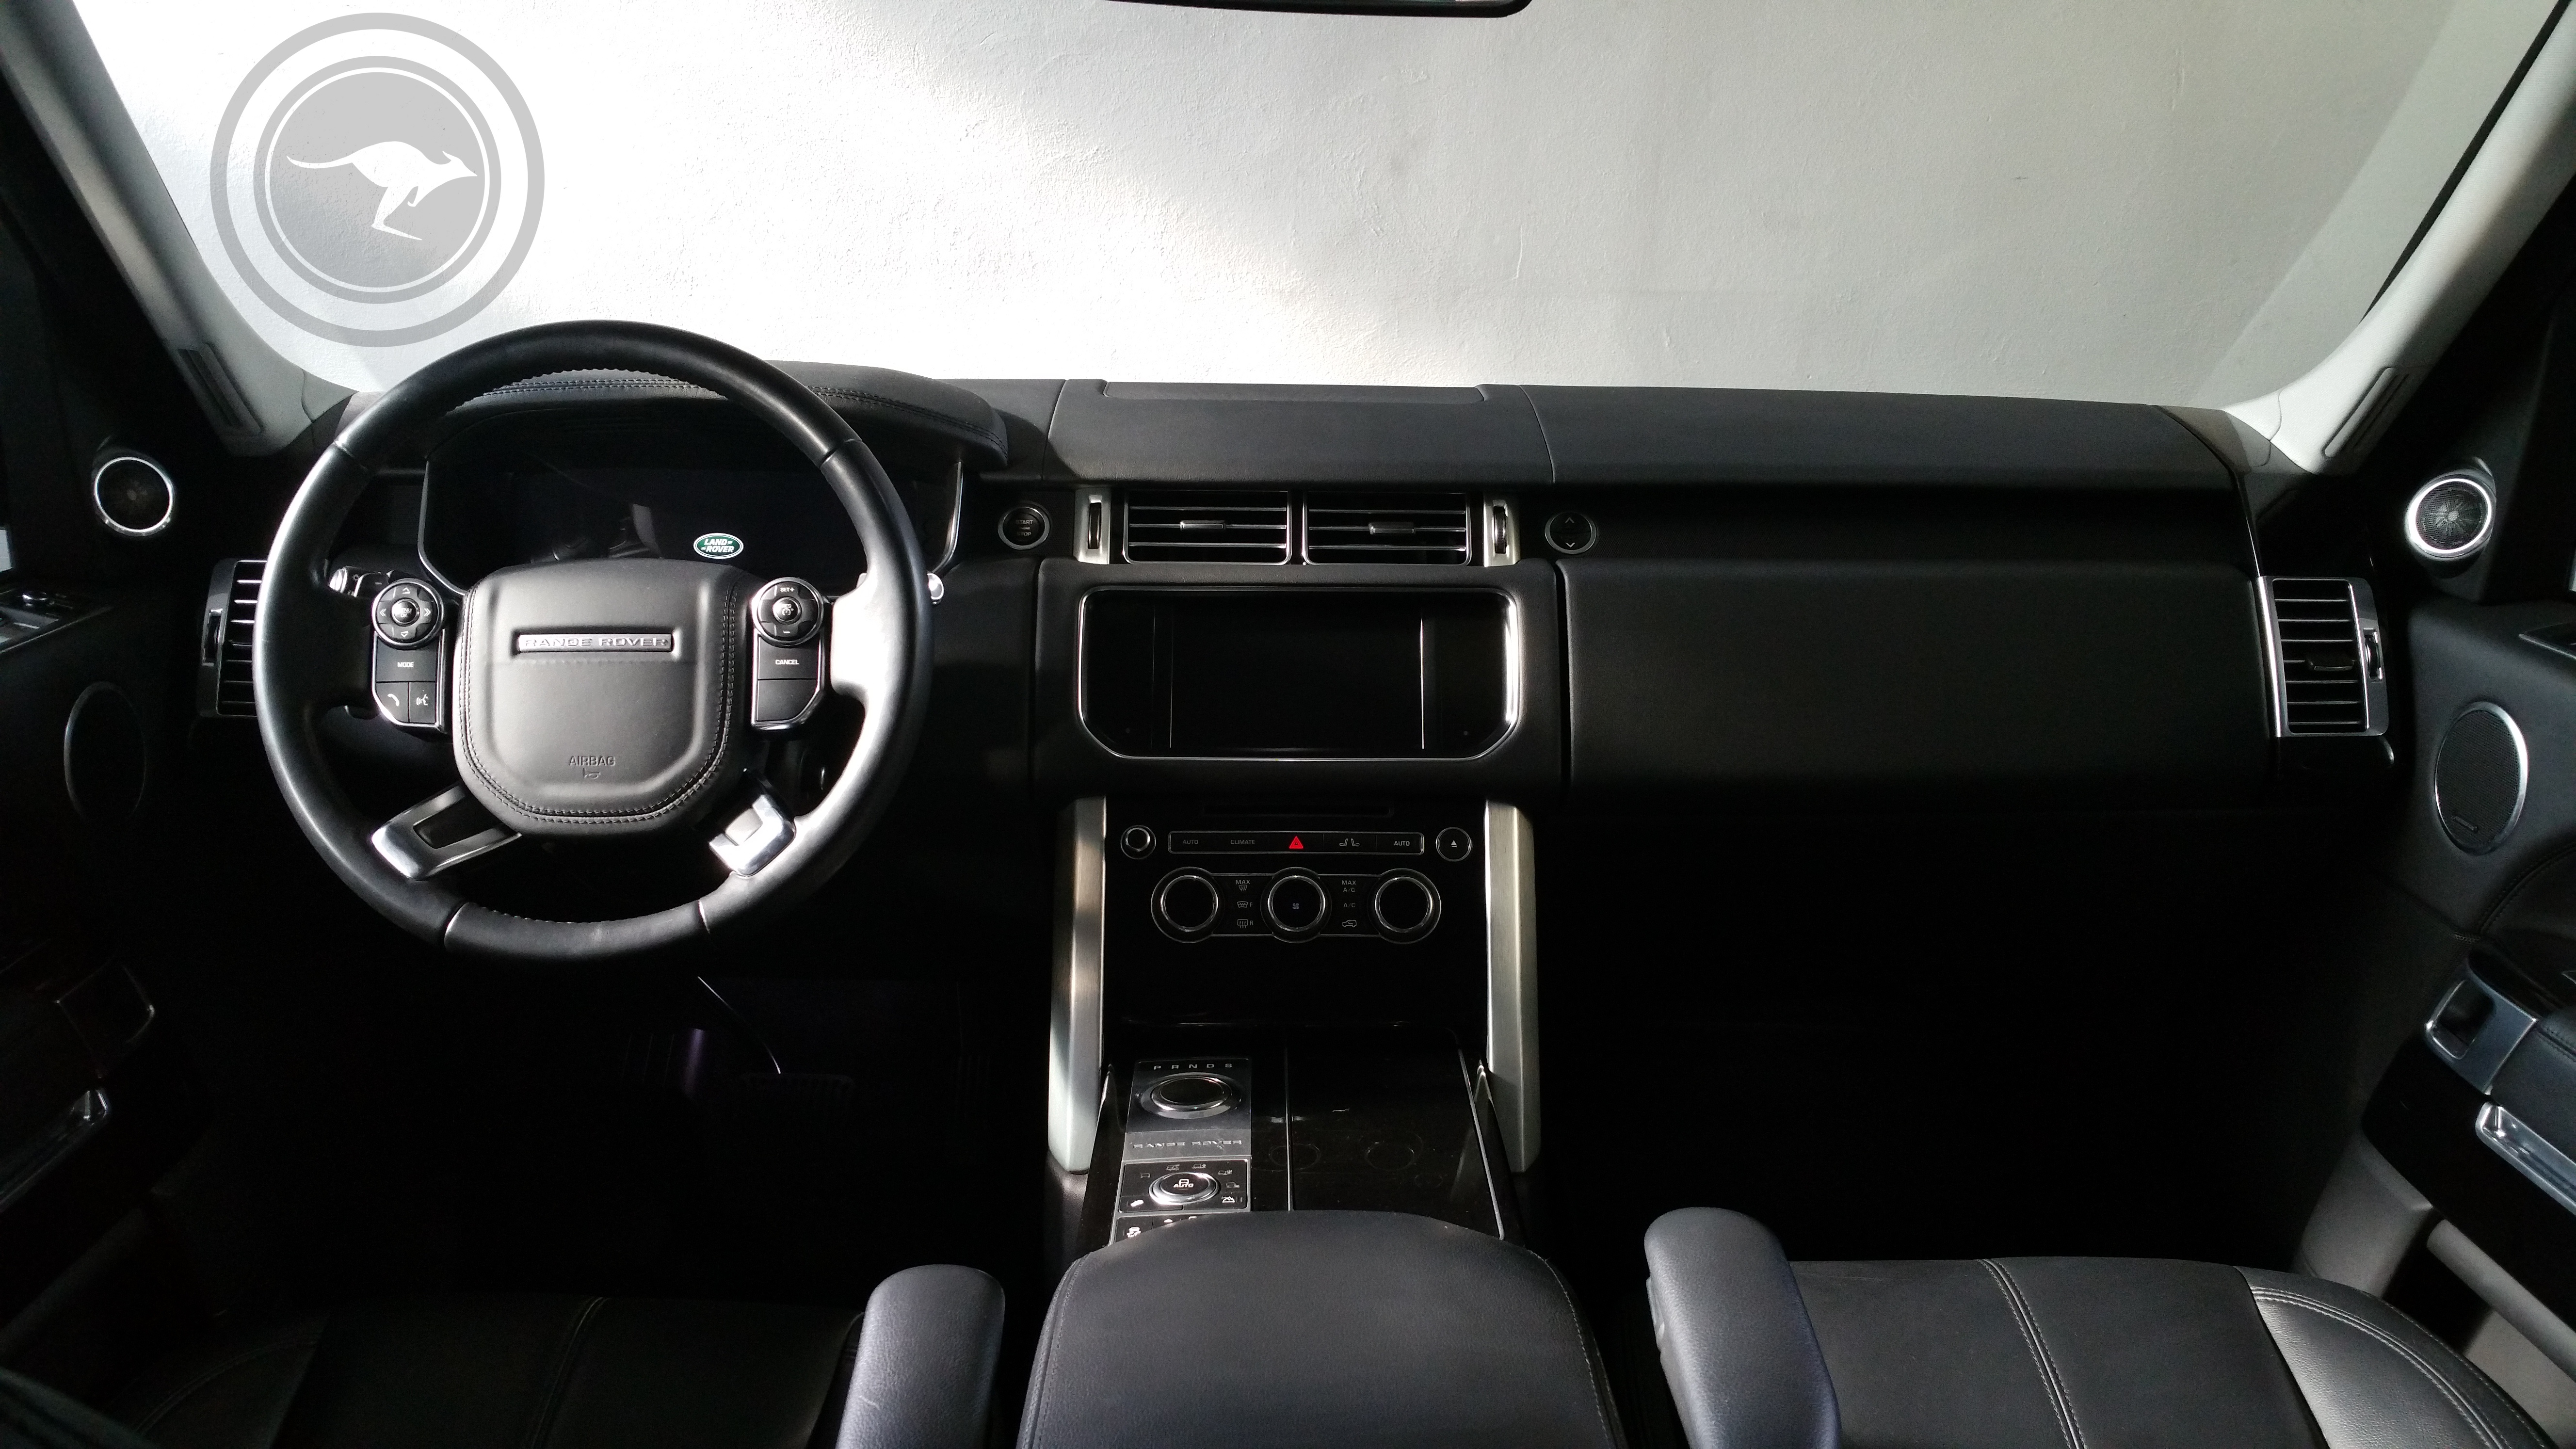 Rent a Land Rover Range Rover Vogue in Milan, Florence, Zurich, Como